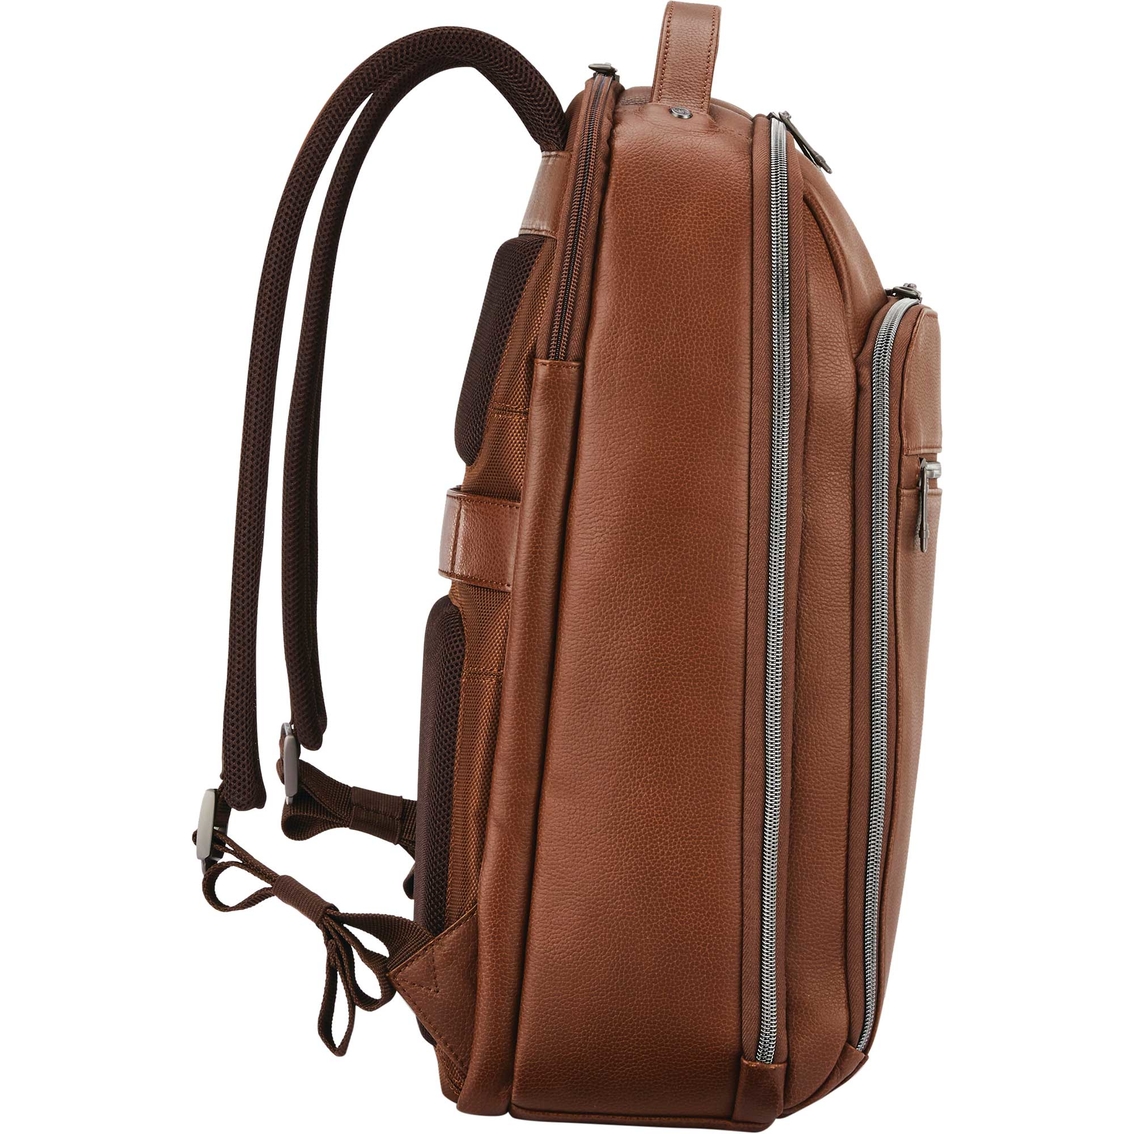 Samsonite Leather Backpack | Backpack | Electronics | Shop The Exchange